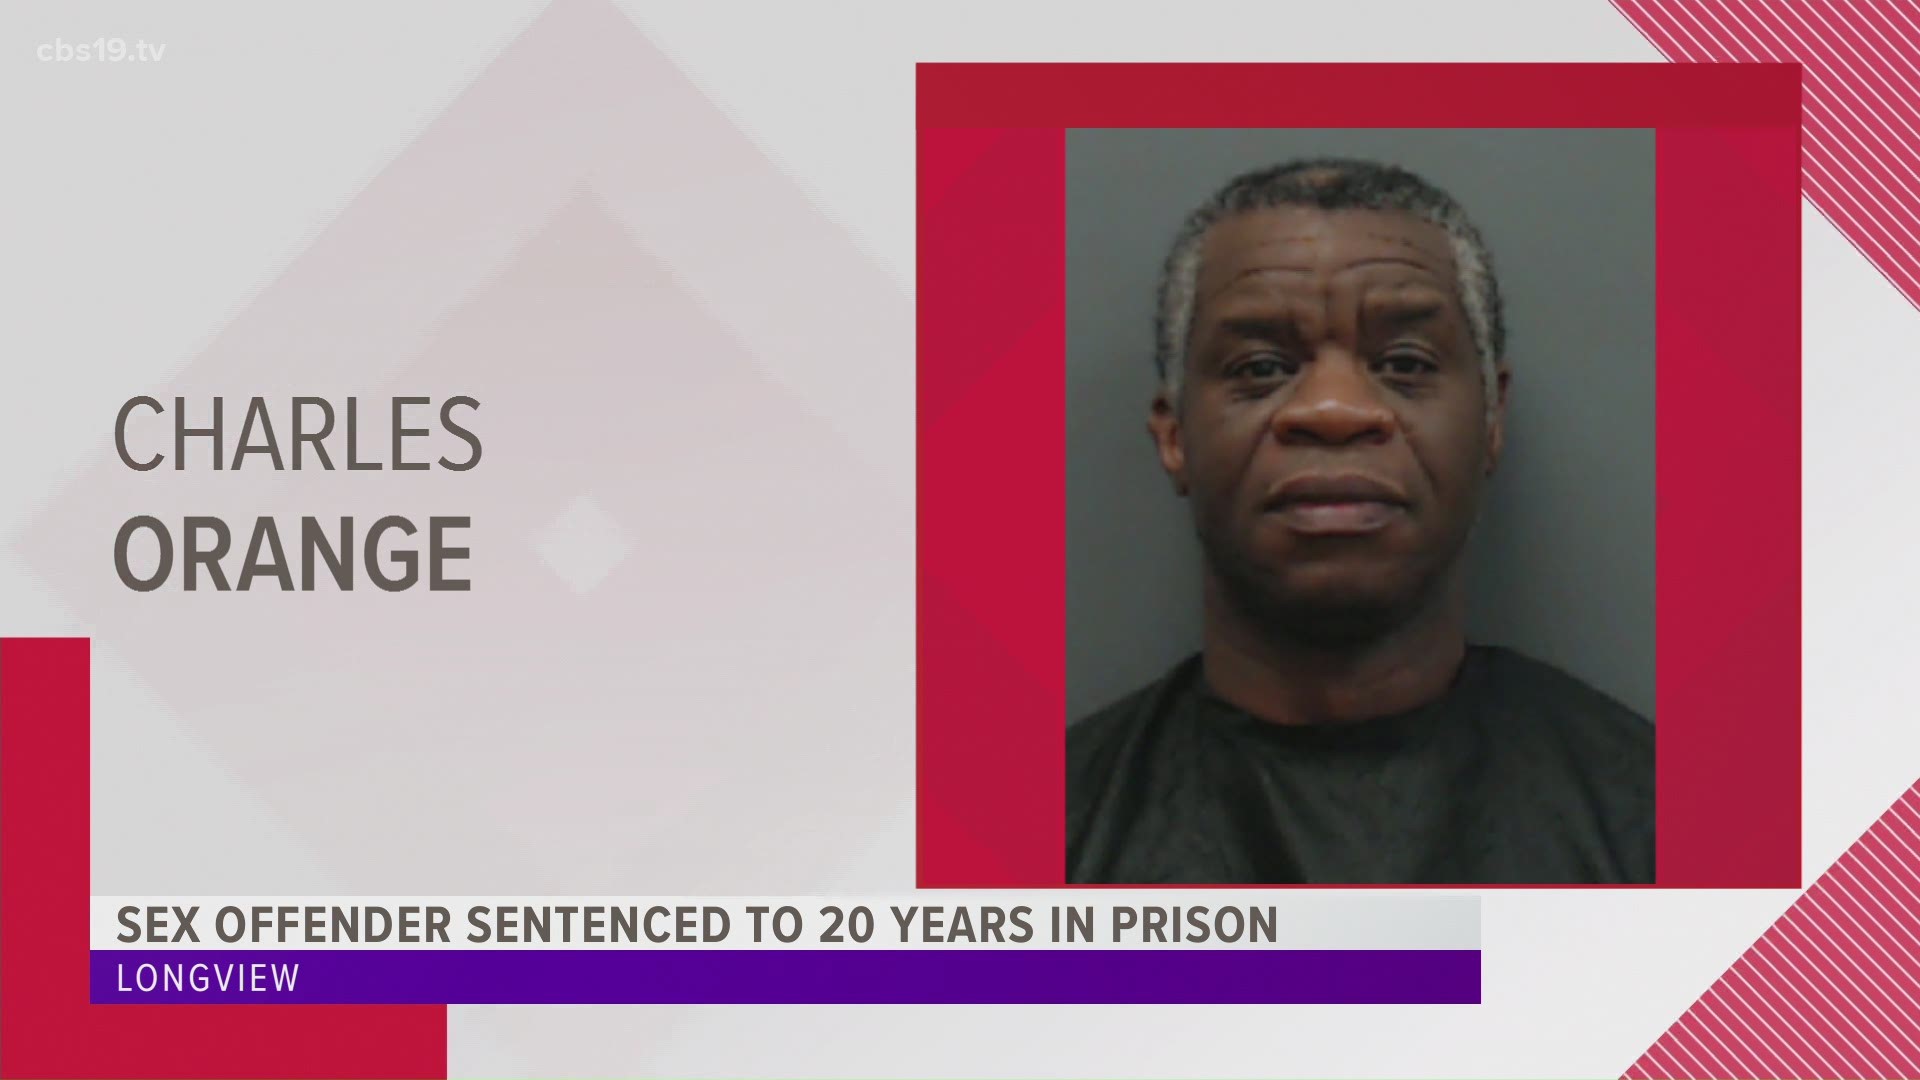 Longview sex offender gets 20 years in prison | cbs19.tv